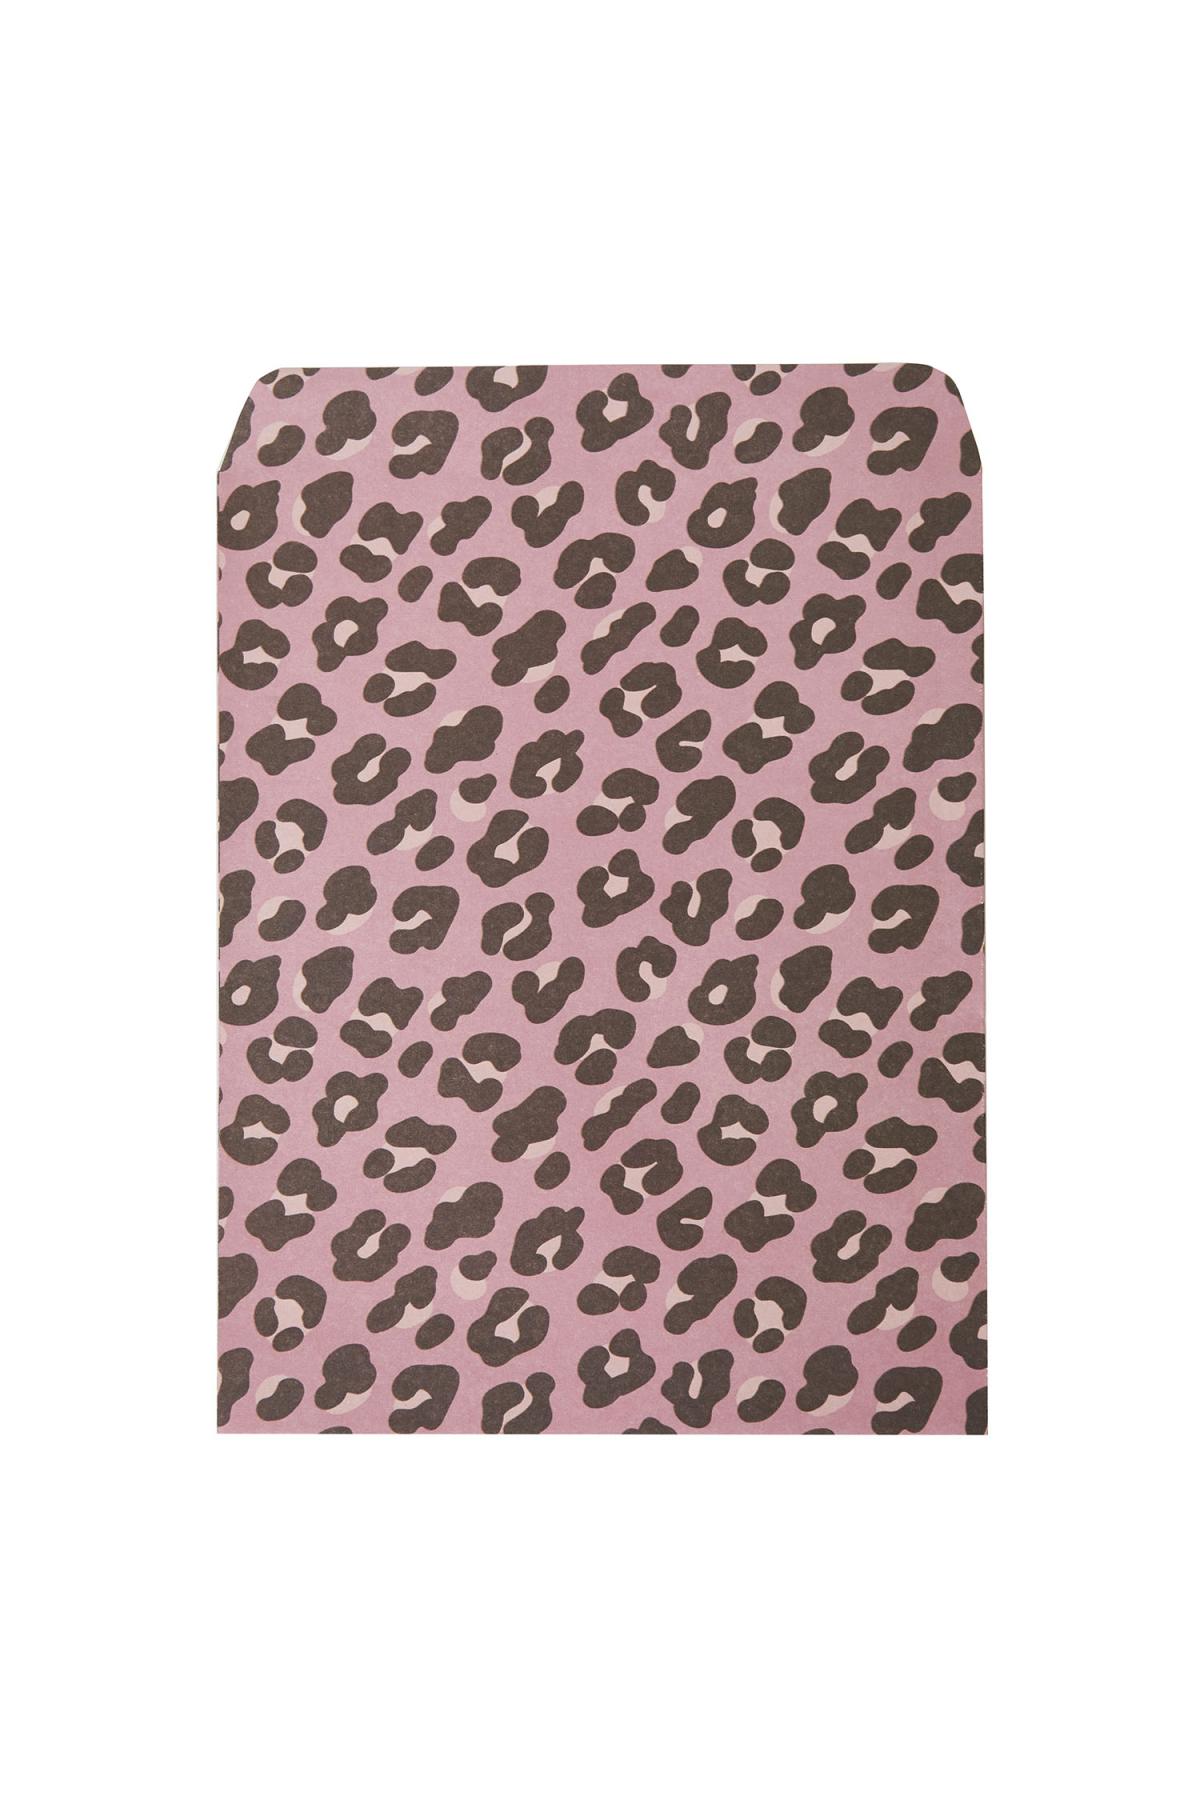 Gift Bag Pink Leopard Large Roze Papier